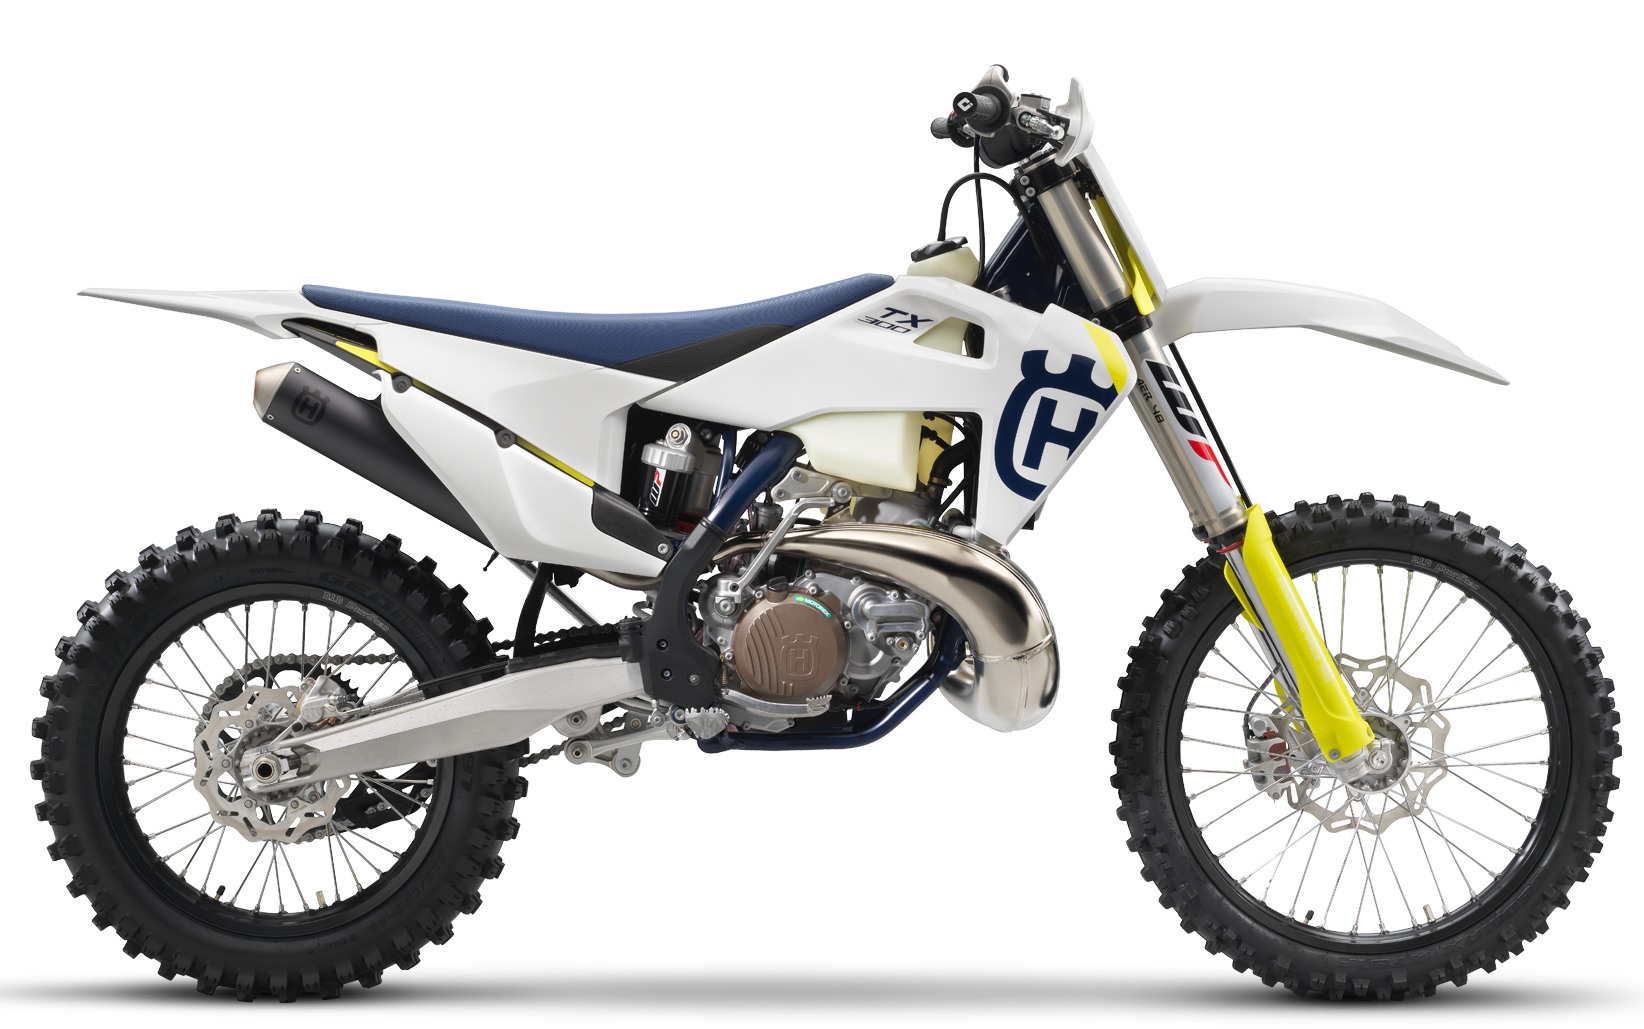 2021 Husqvarna Tx 300i For Sale in Costa Mesa, CA - Cycle 